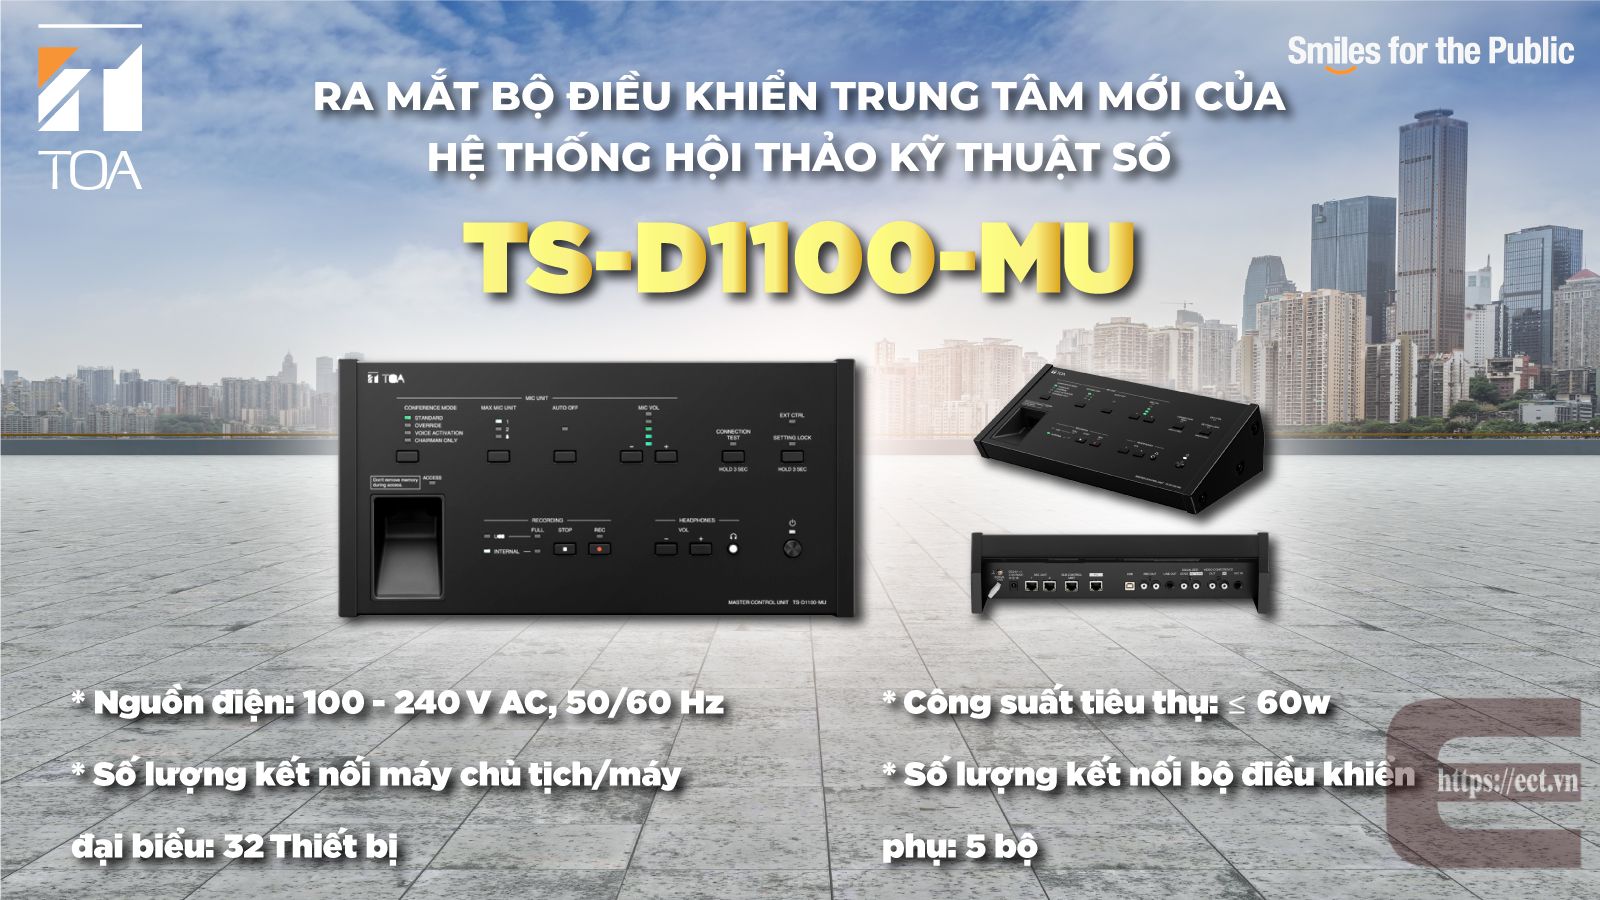 TS-D1100-MU-bo-trung-tam-hoi-thao-moi-trong-he-thong-hoi-thao-co-day-TS-D1000.jpg